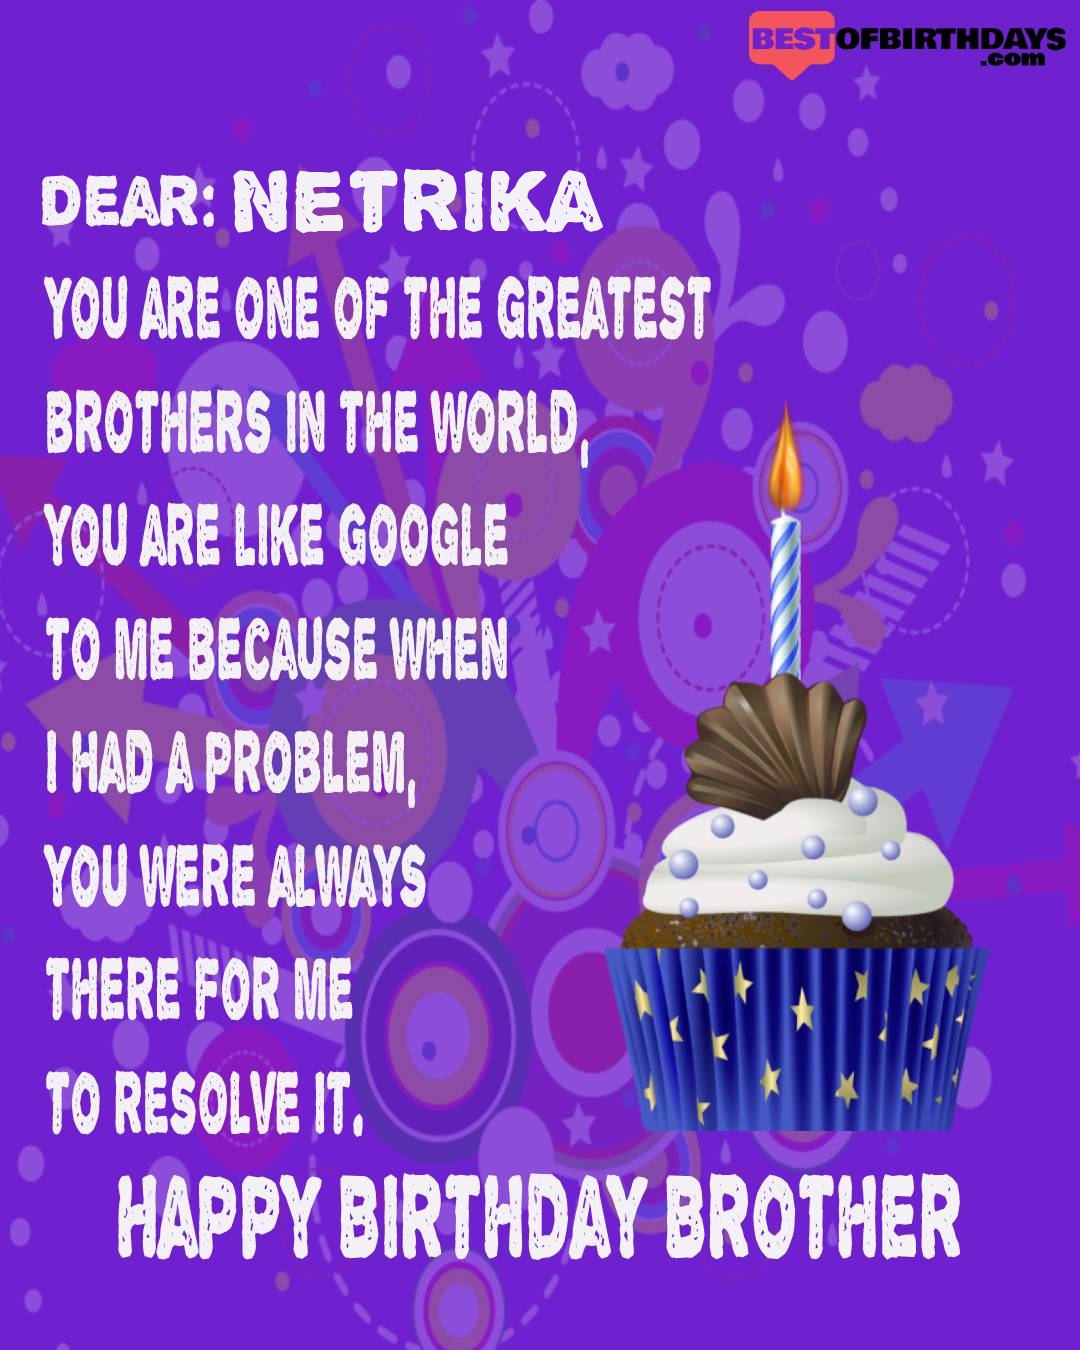 Happy birthday netrika bhai brother bro